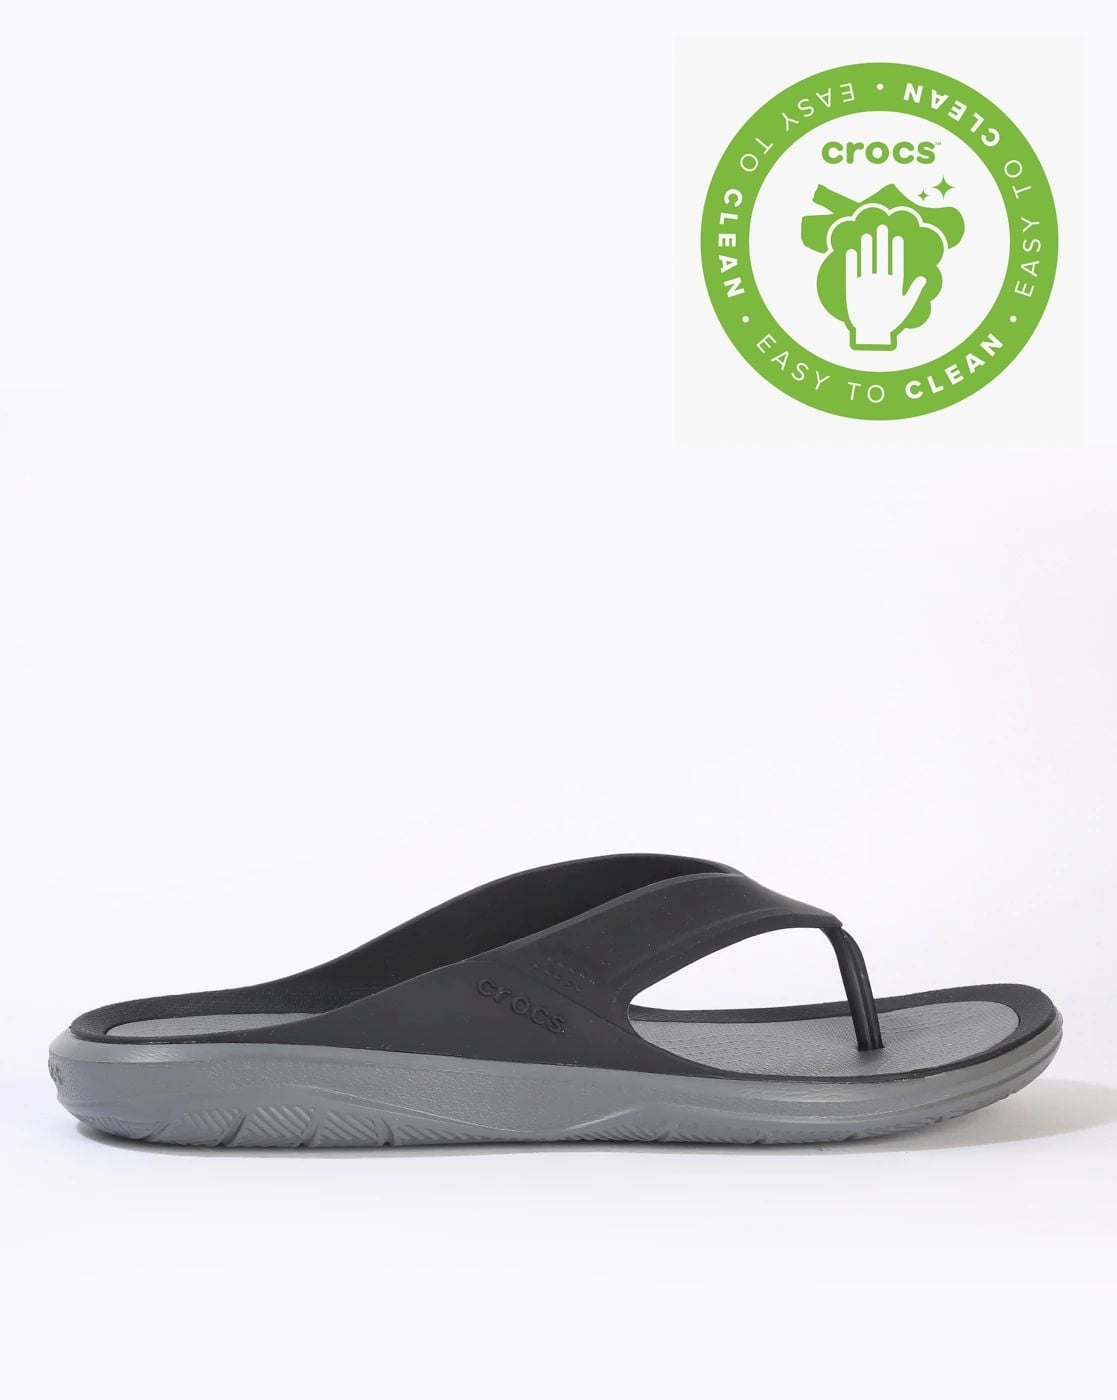 crocs men's flip flops thong sandals